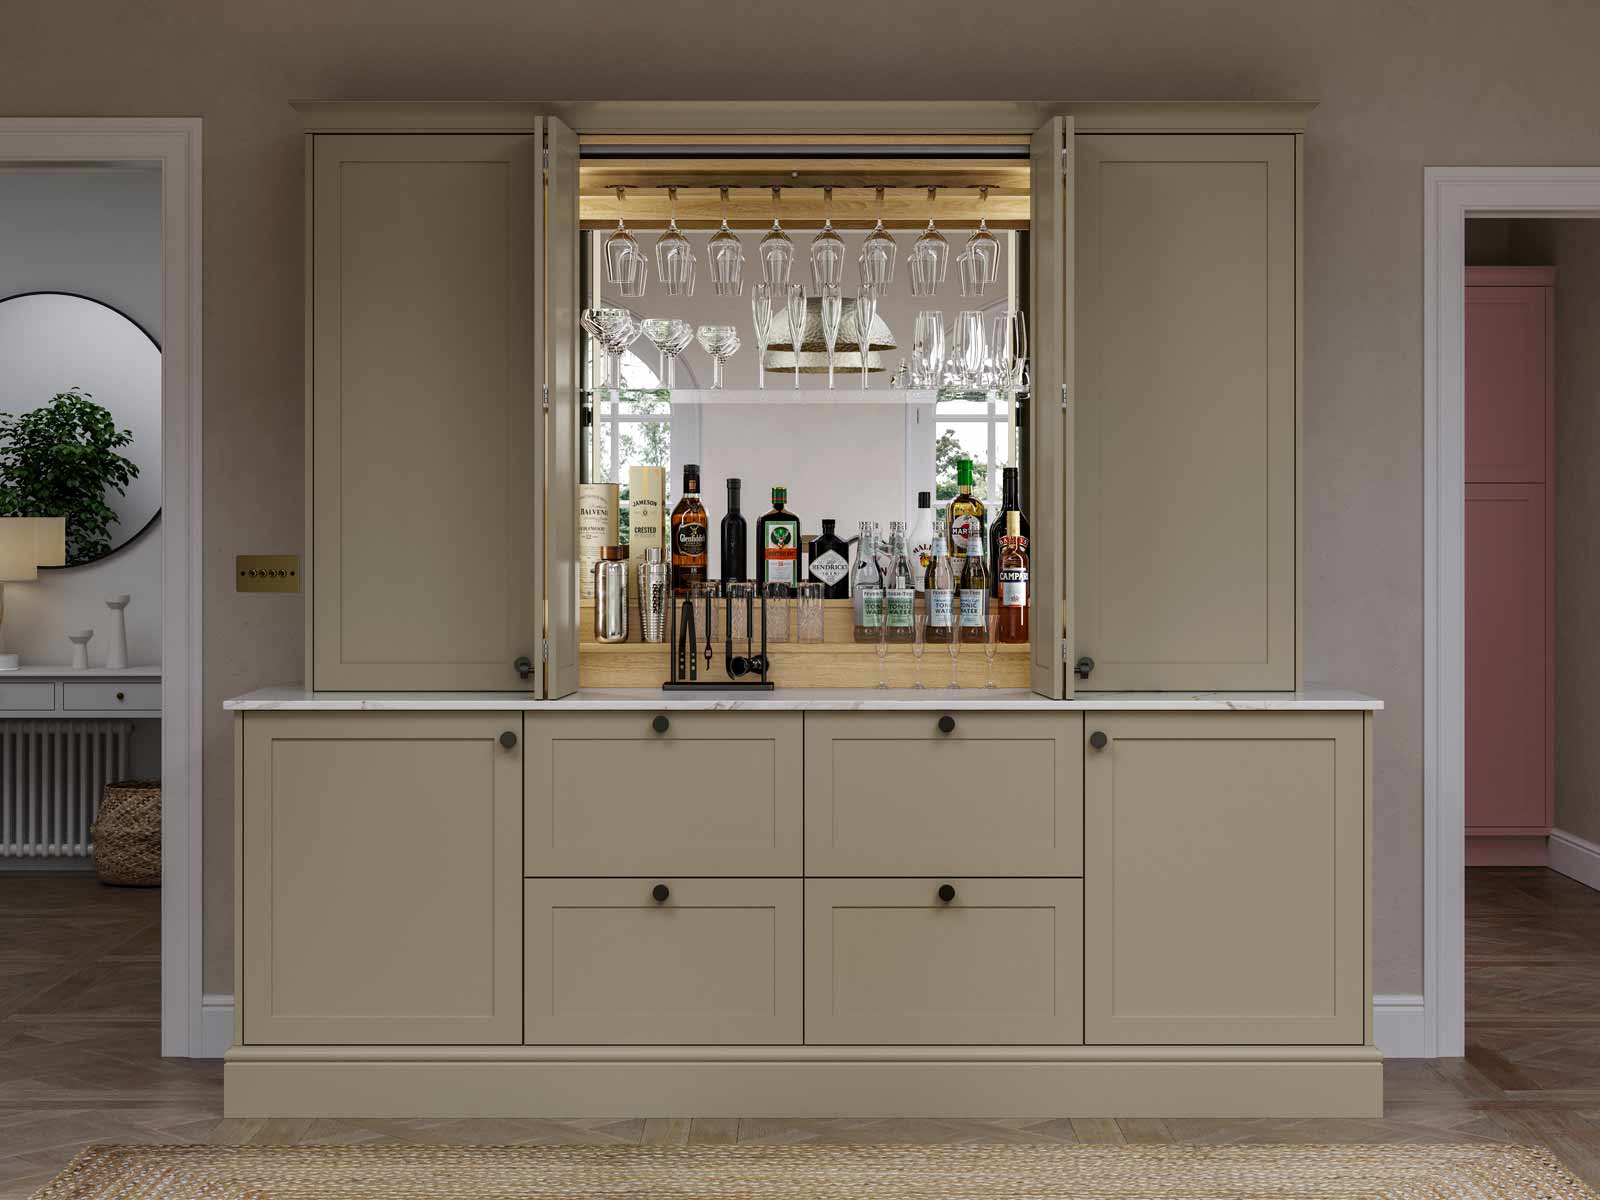 A Sigma 3 Bar Dresser encased in a pale green kitchen range doors